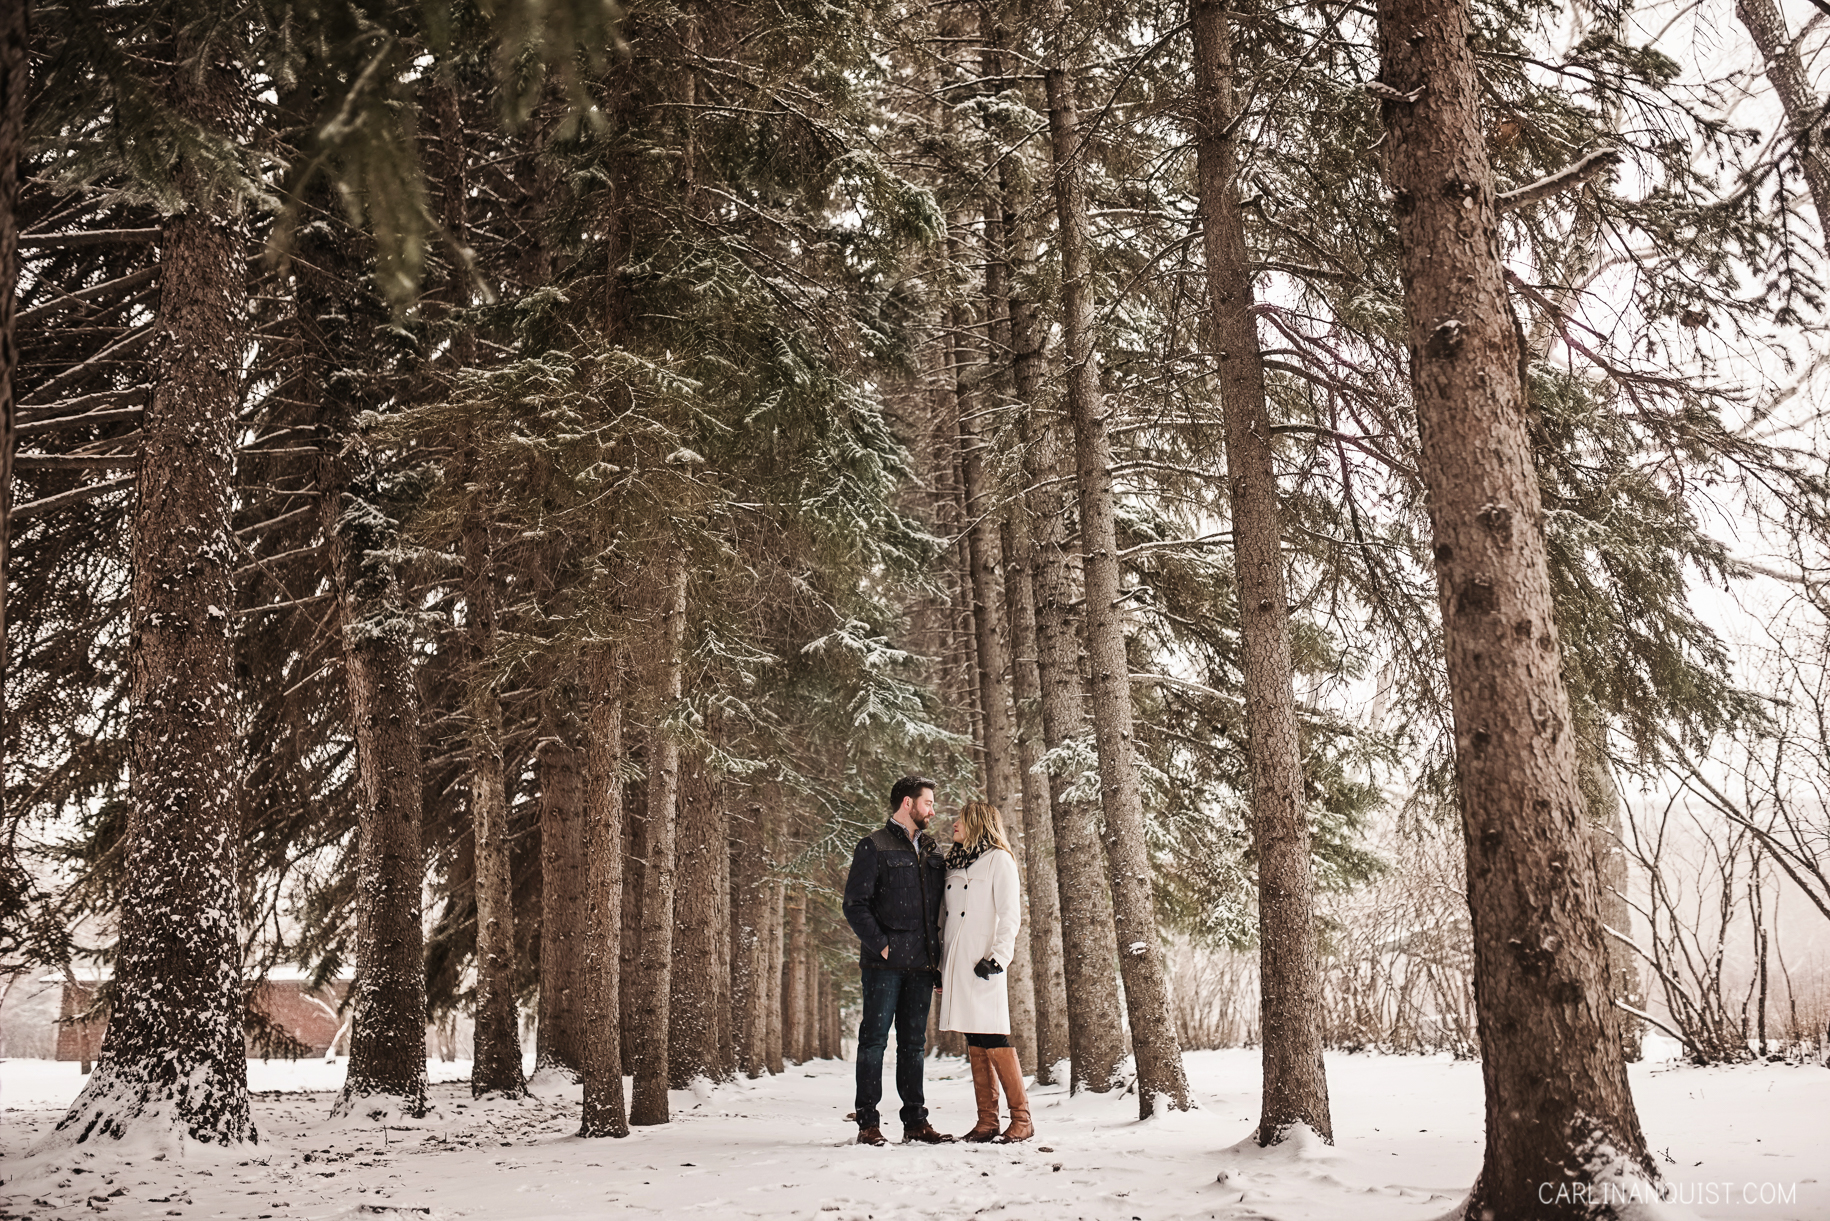 Calgary Winter Engagement Photos at Edworthy Park